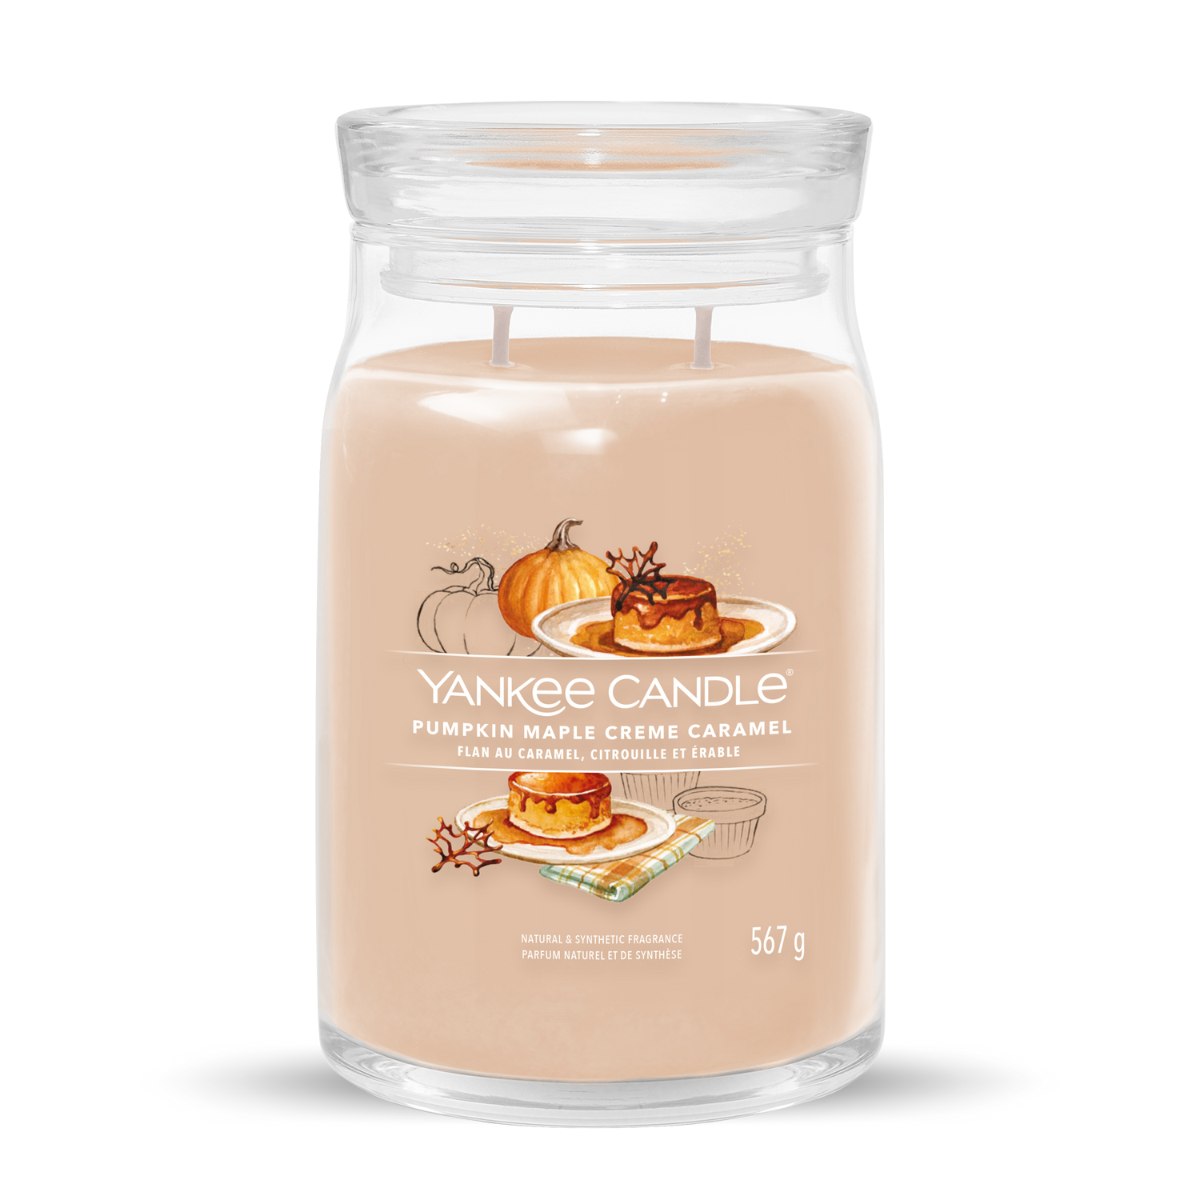 Pumpkin Maple Creme Caramel - Signature Duftkerze im Glas 567g - Yankee Candle®